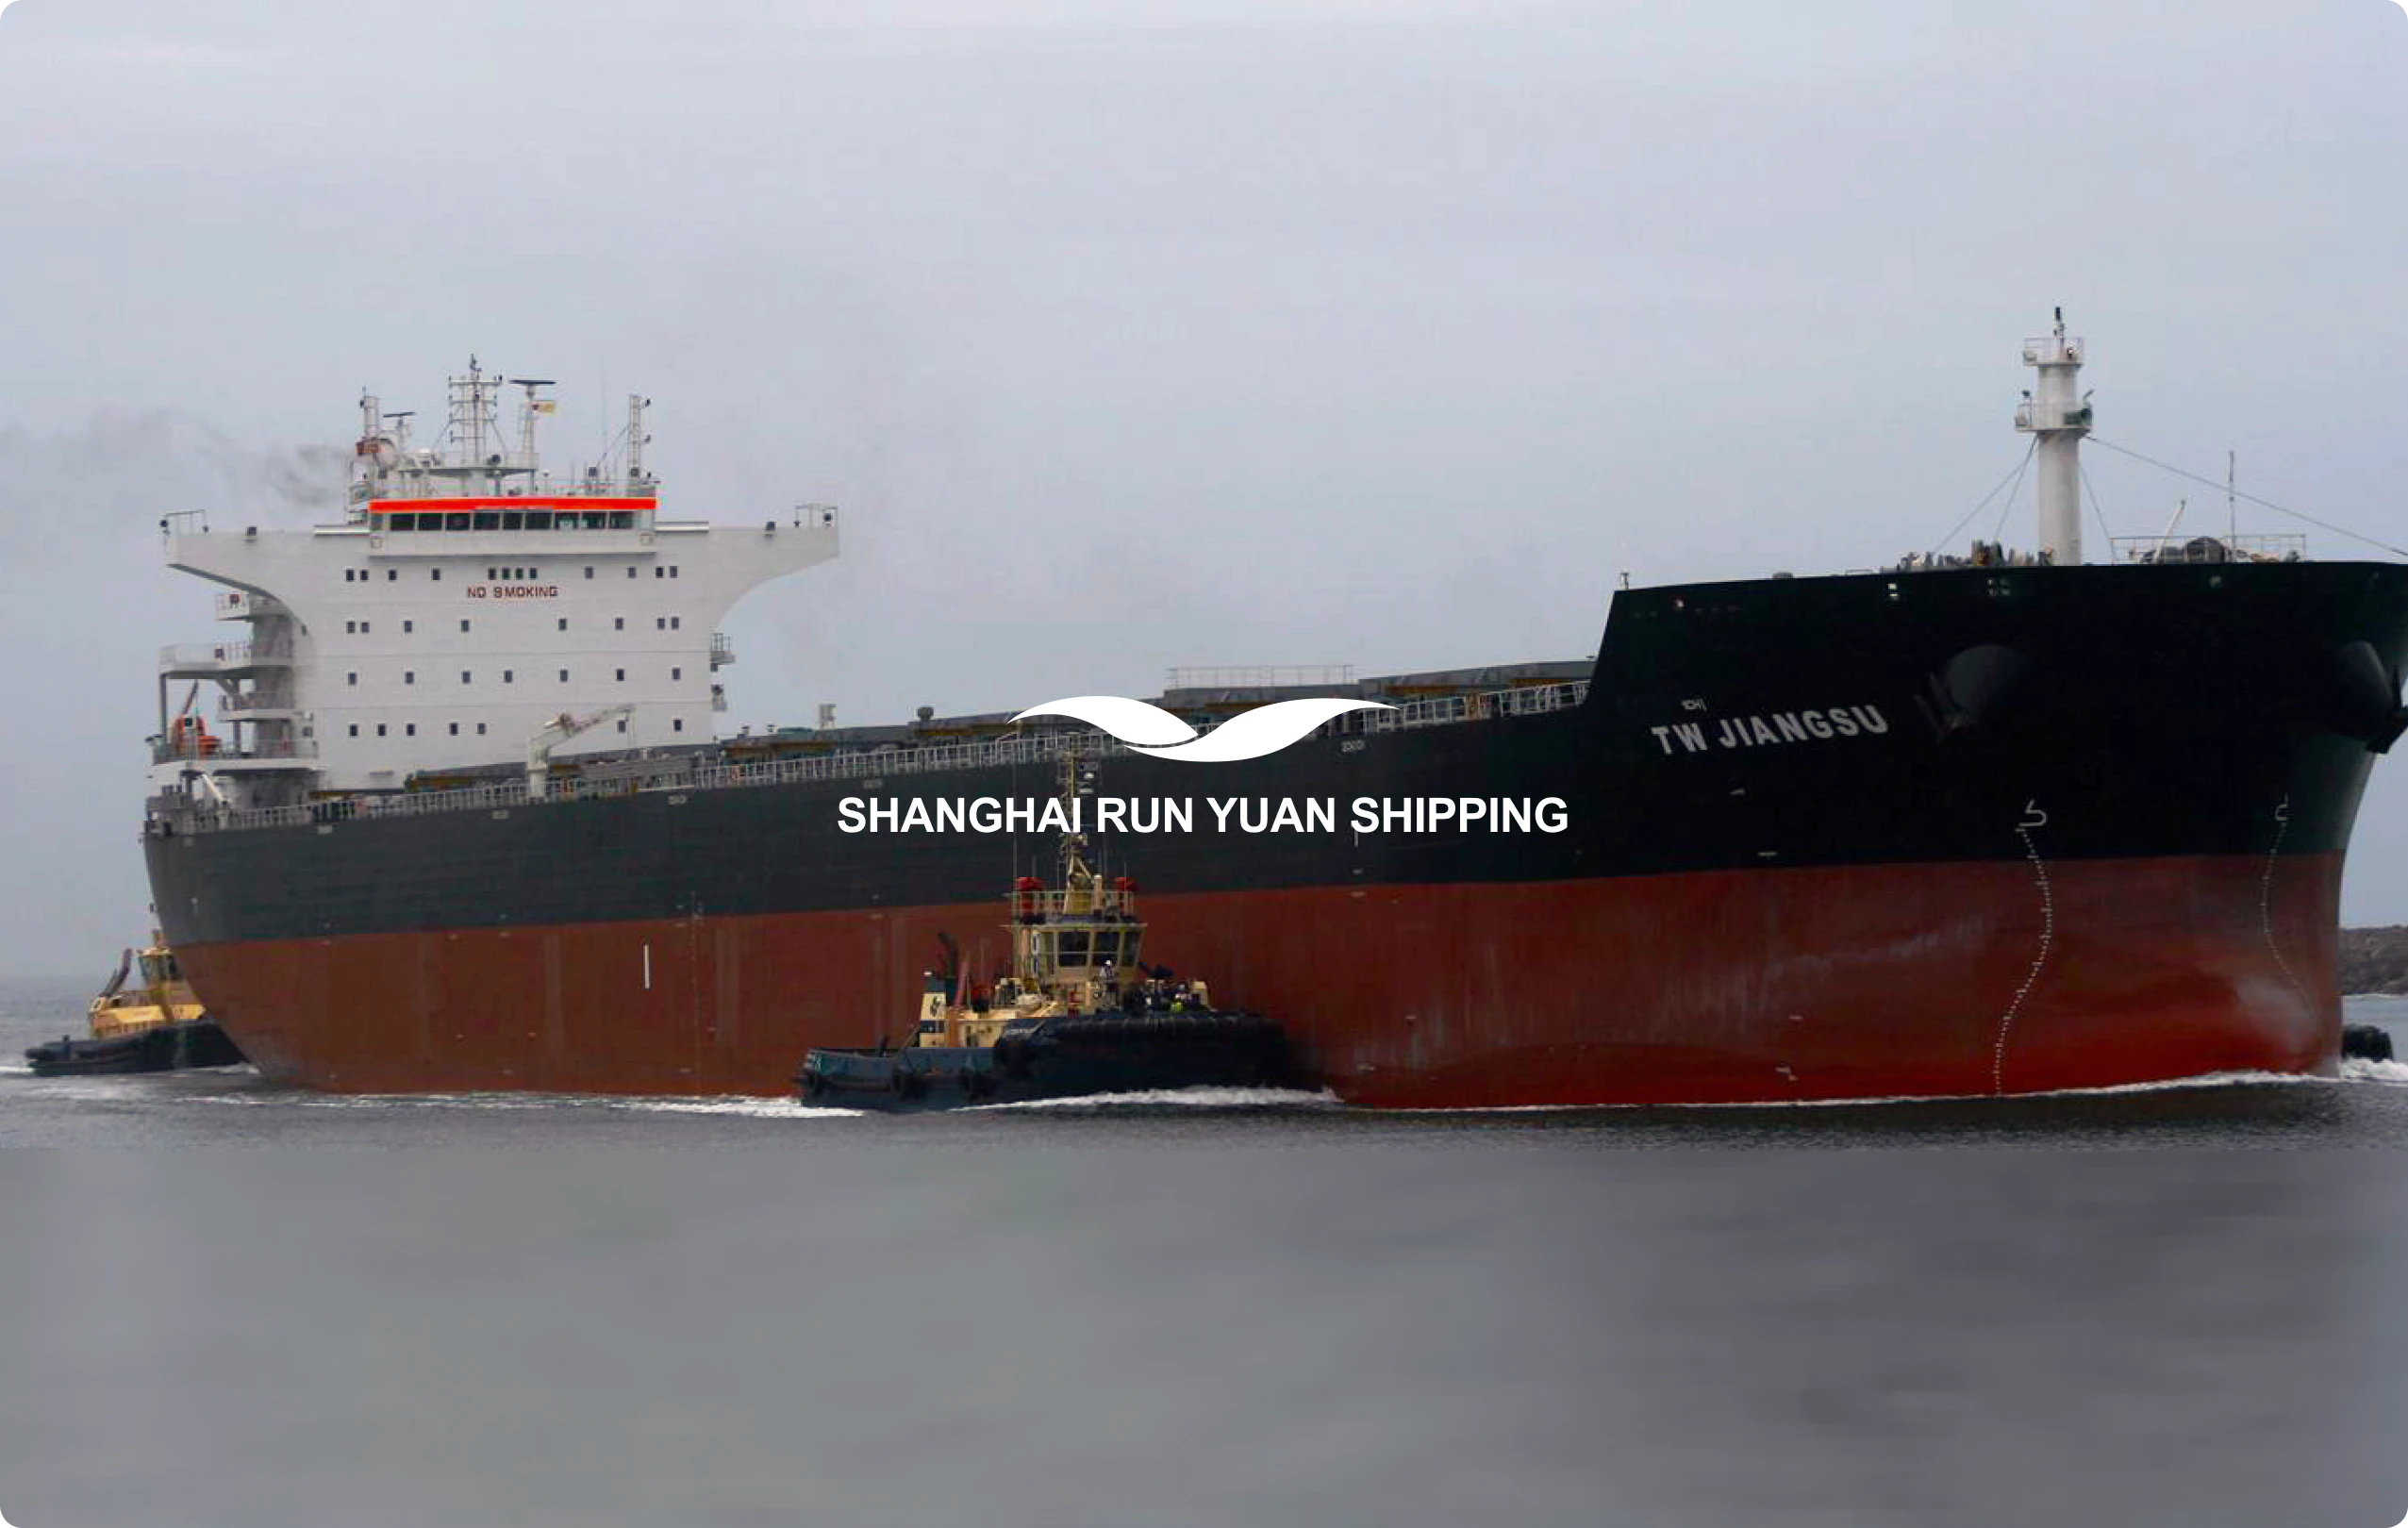 Shanghai Run Yuan Shipping